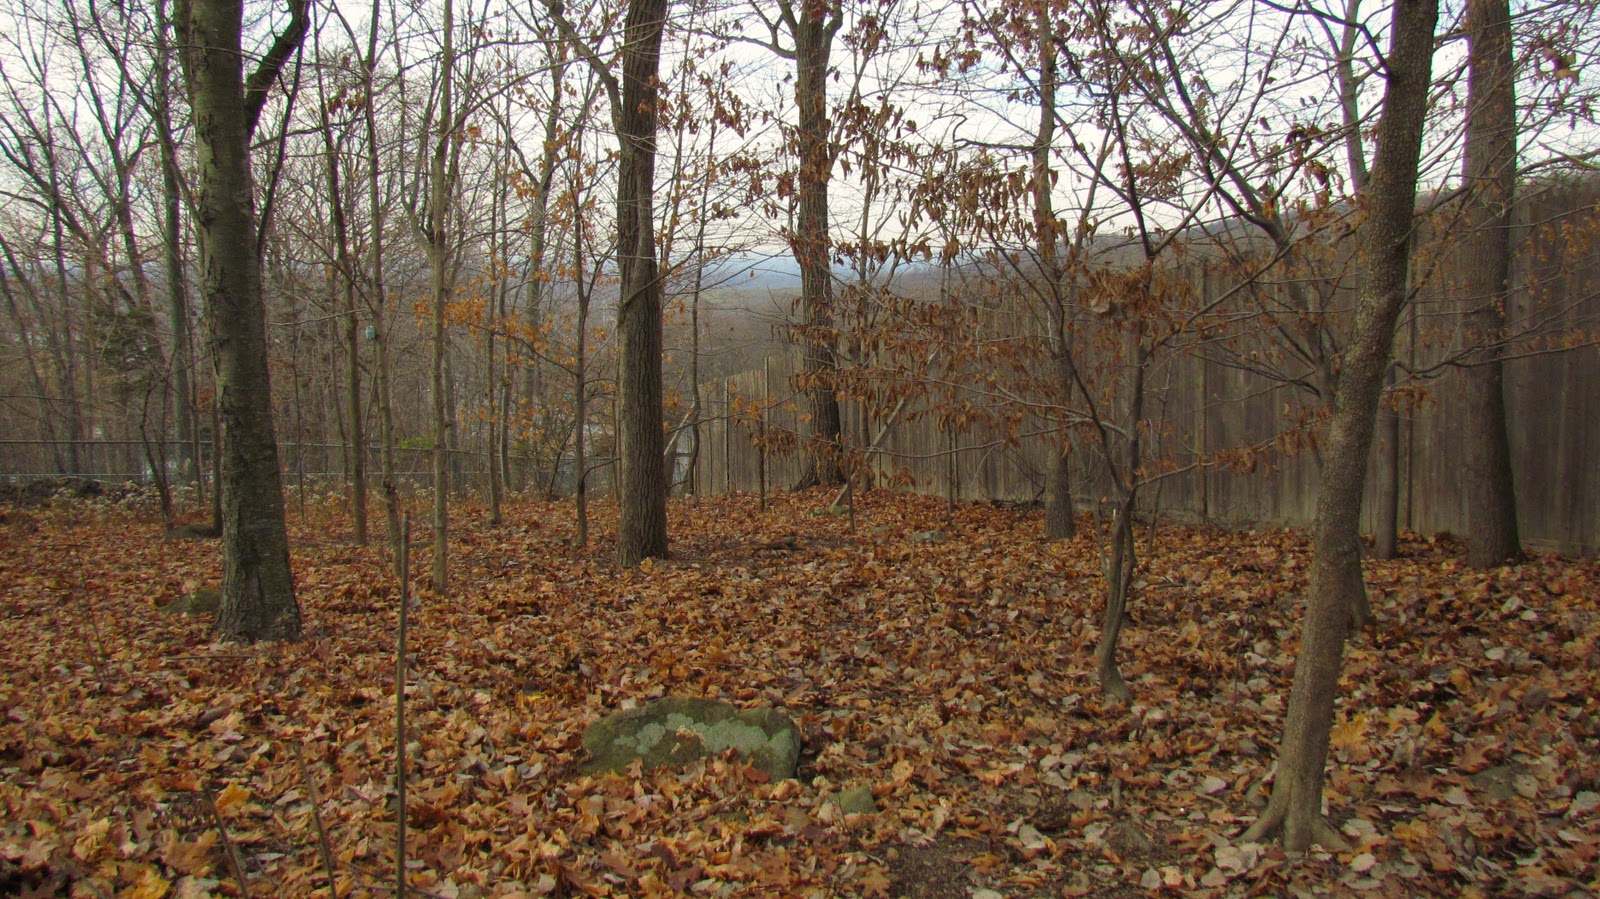 Nyack Backyard: November 2011